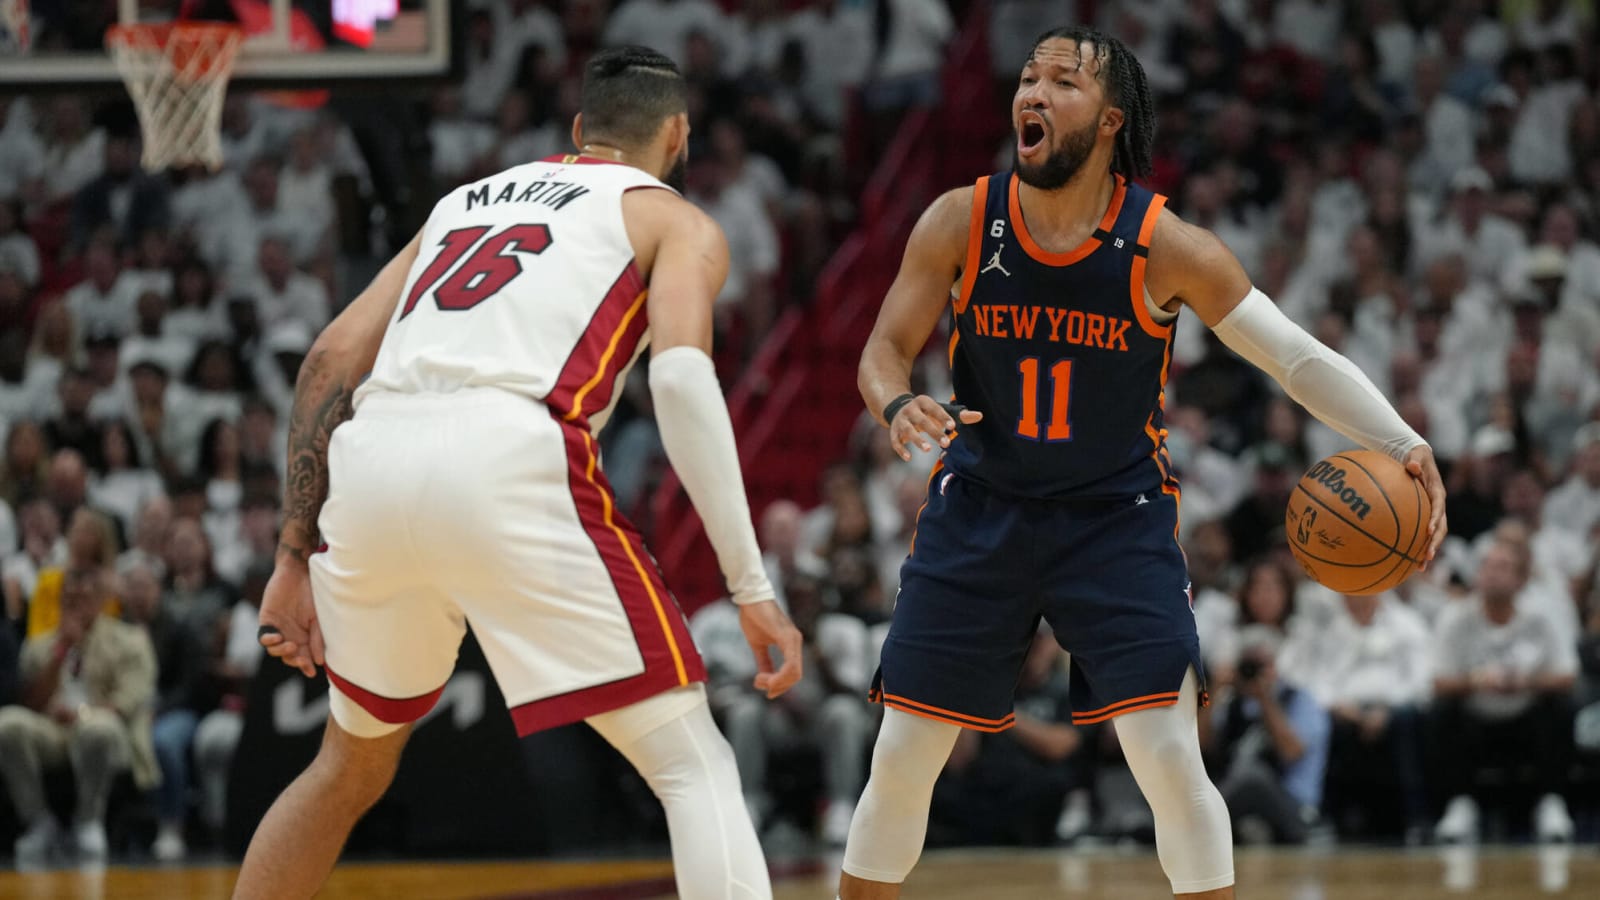 Brutal late-game decision ends Knicks' season